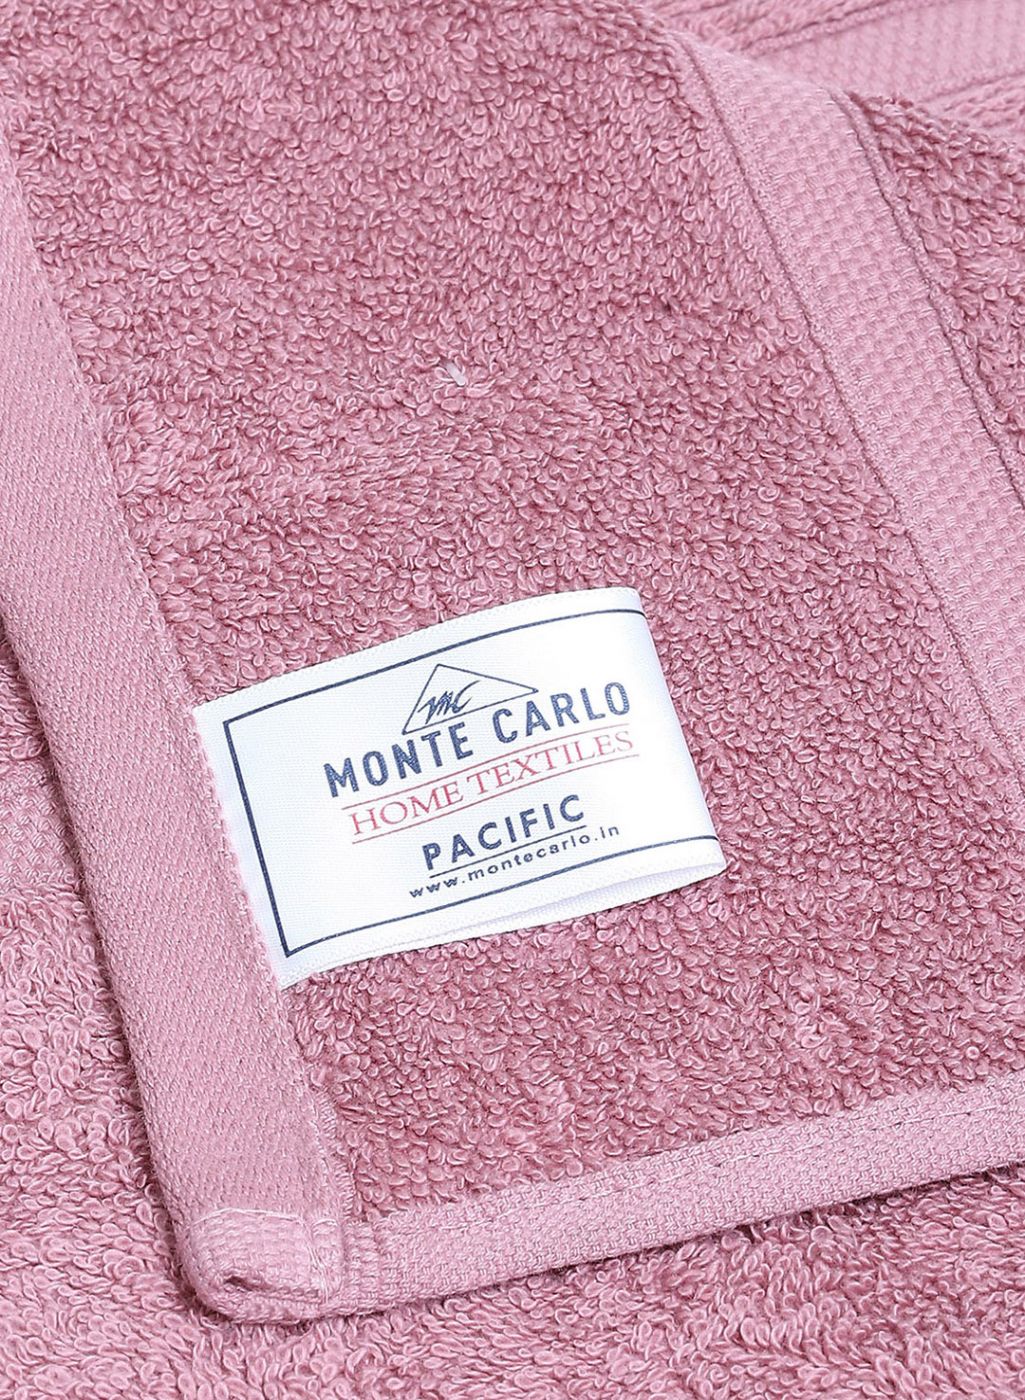 Pink Cotton 525 GSM Bath Towel